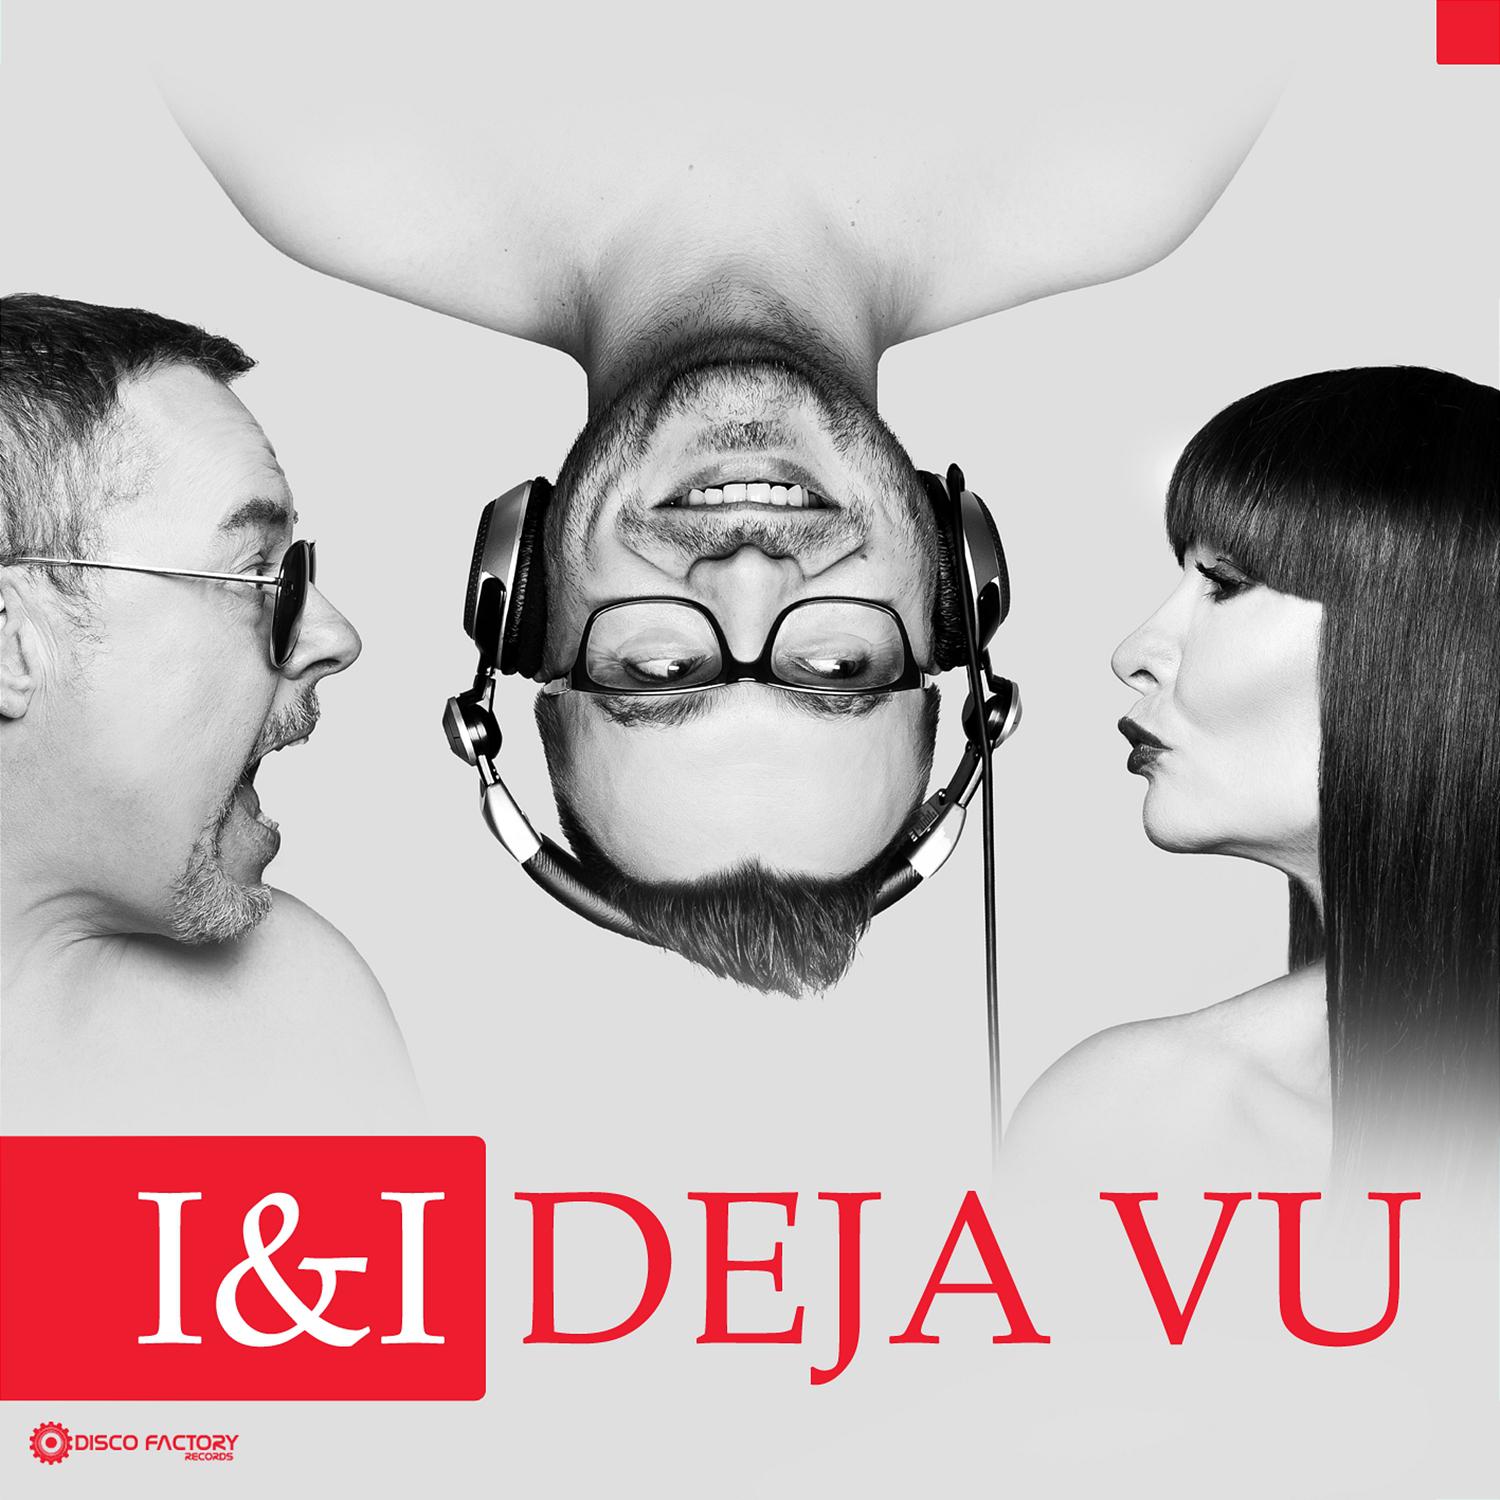 I - Deja vu (Radio Edit)